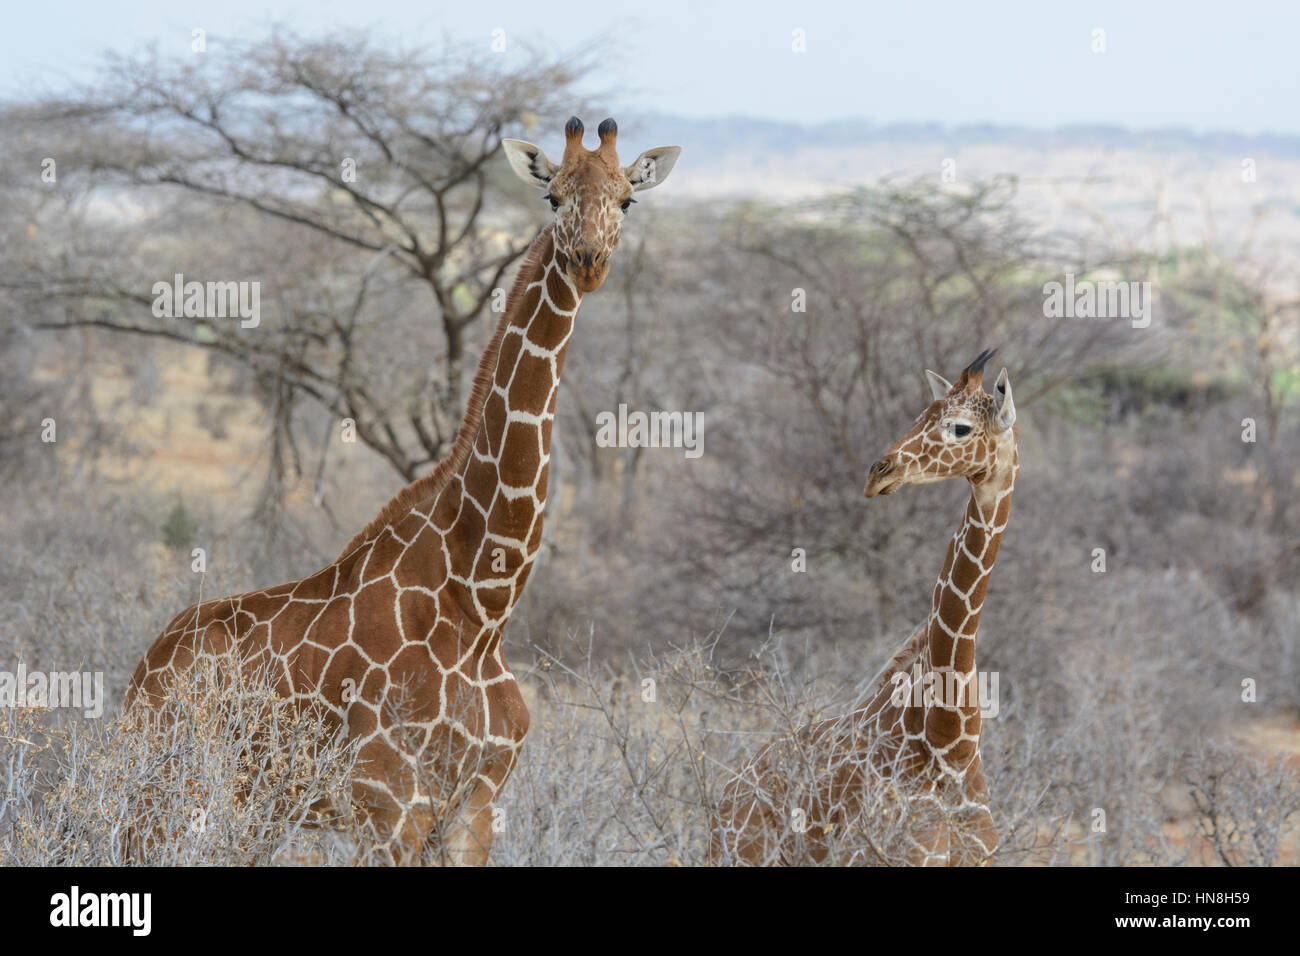 Two Wild Reticulated Giraffes, Giraffa camelopardalis reticulata, Buffalo Springs Game Reserve, Samburu, Kenya, Adult Giraffe and Calf. Stock Photo